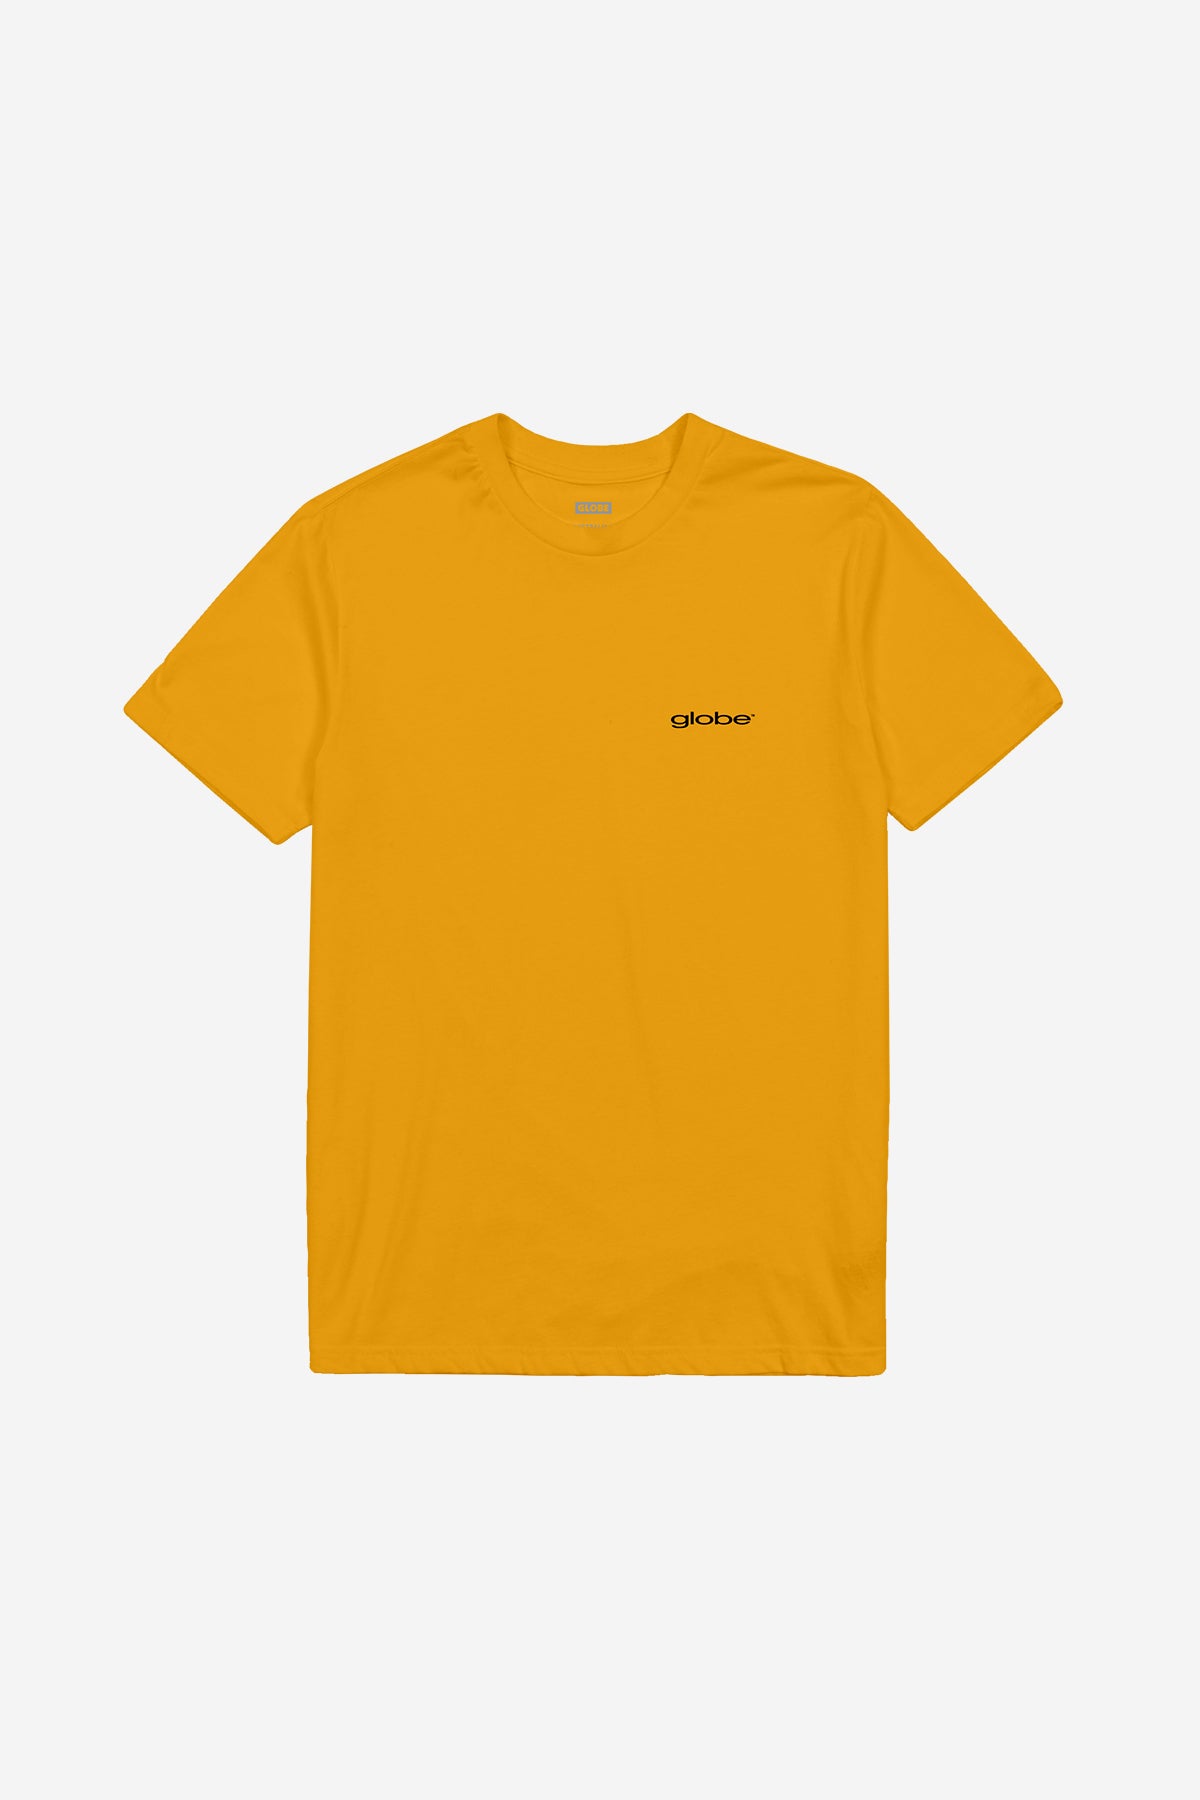 Globe - Camiseta ovalada - Citrus